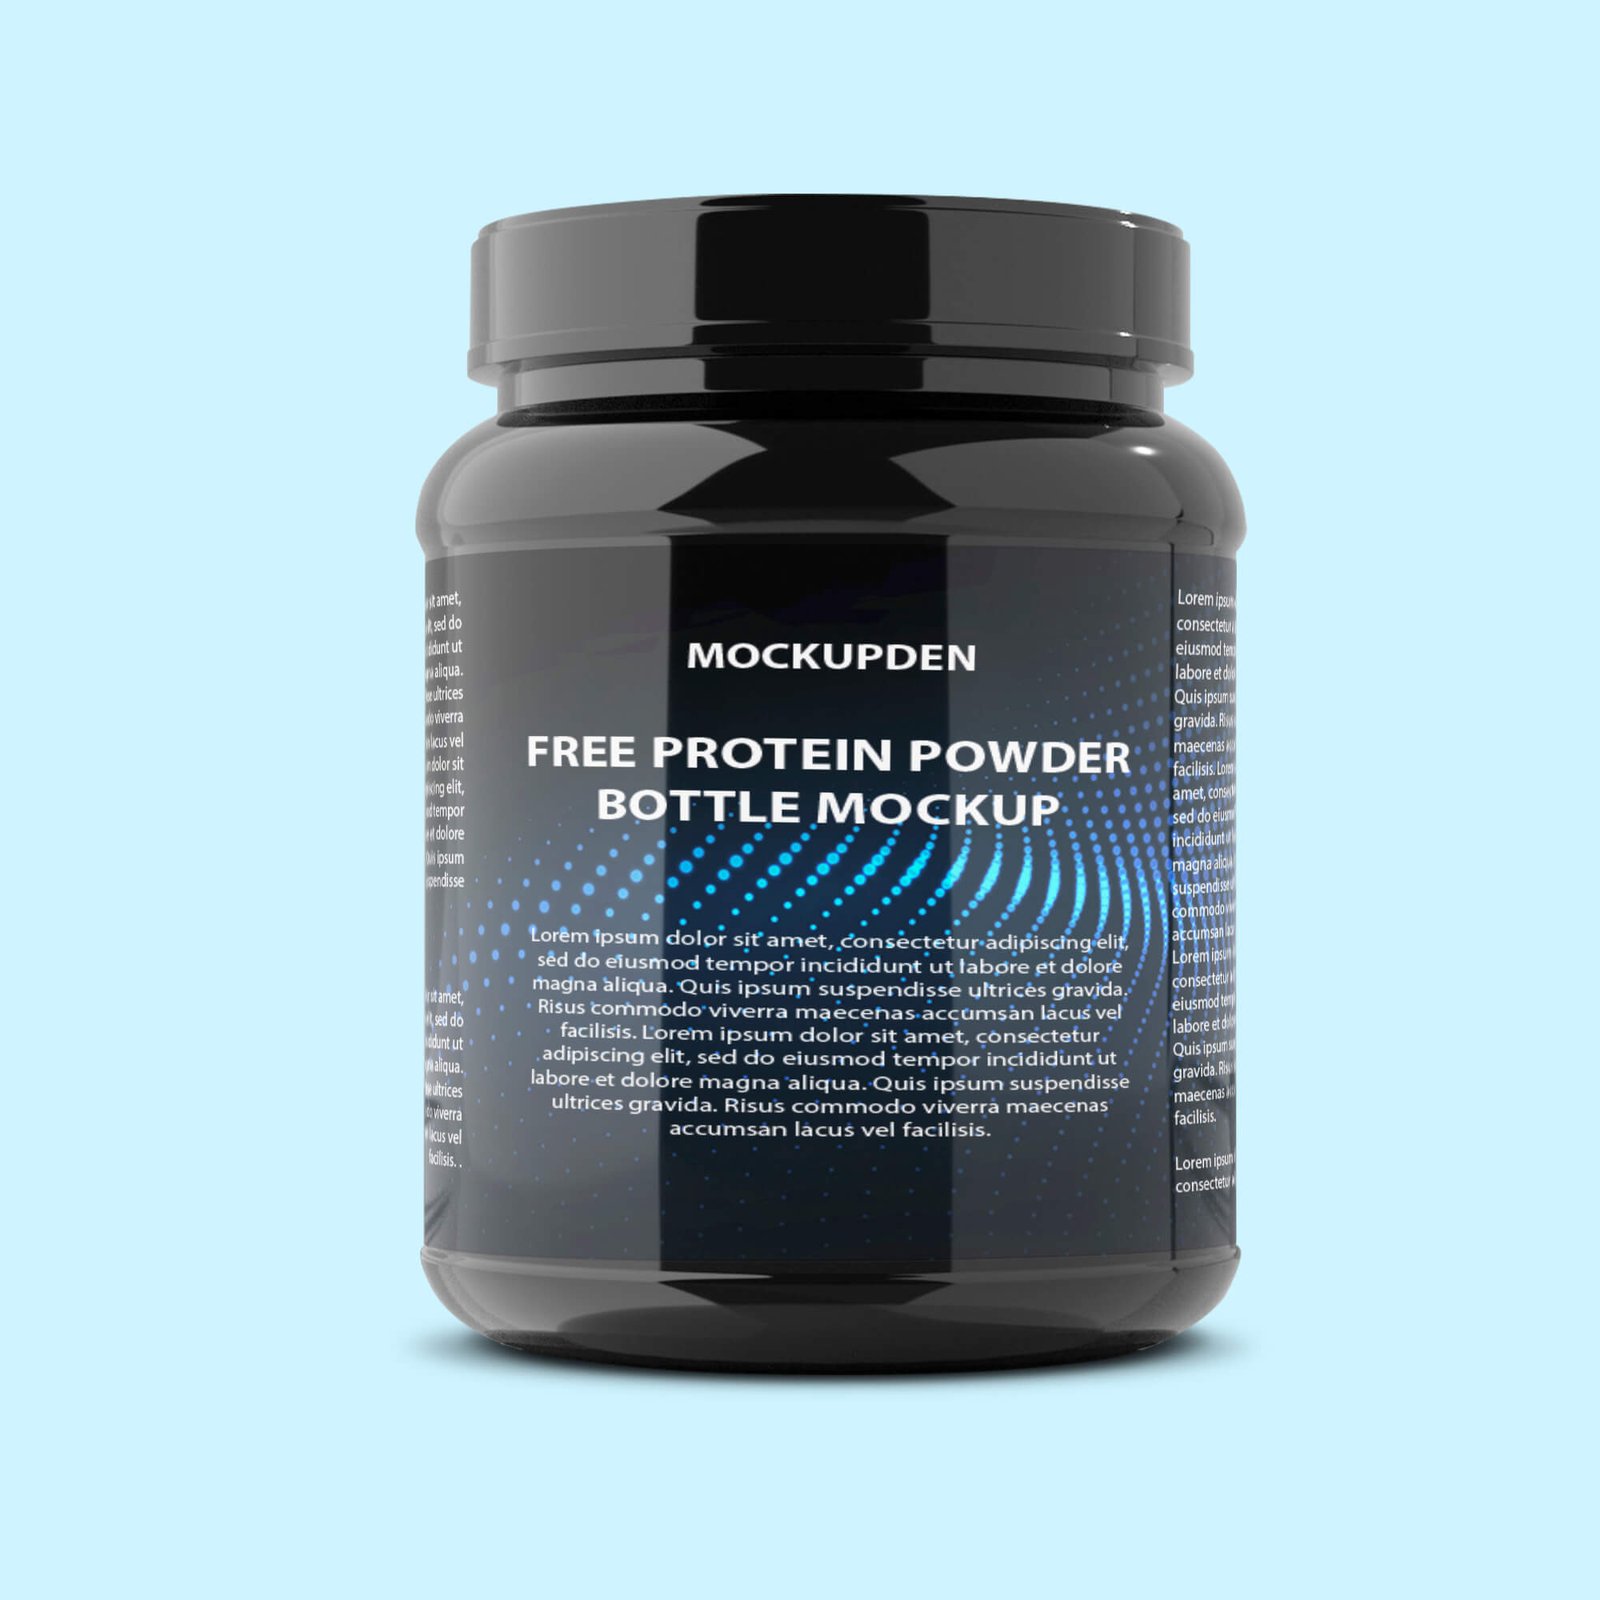 Design Free Protein Powder Bottle Mockup PSD Template